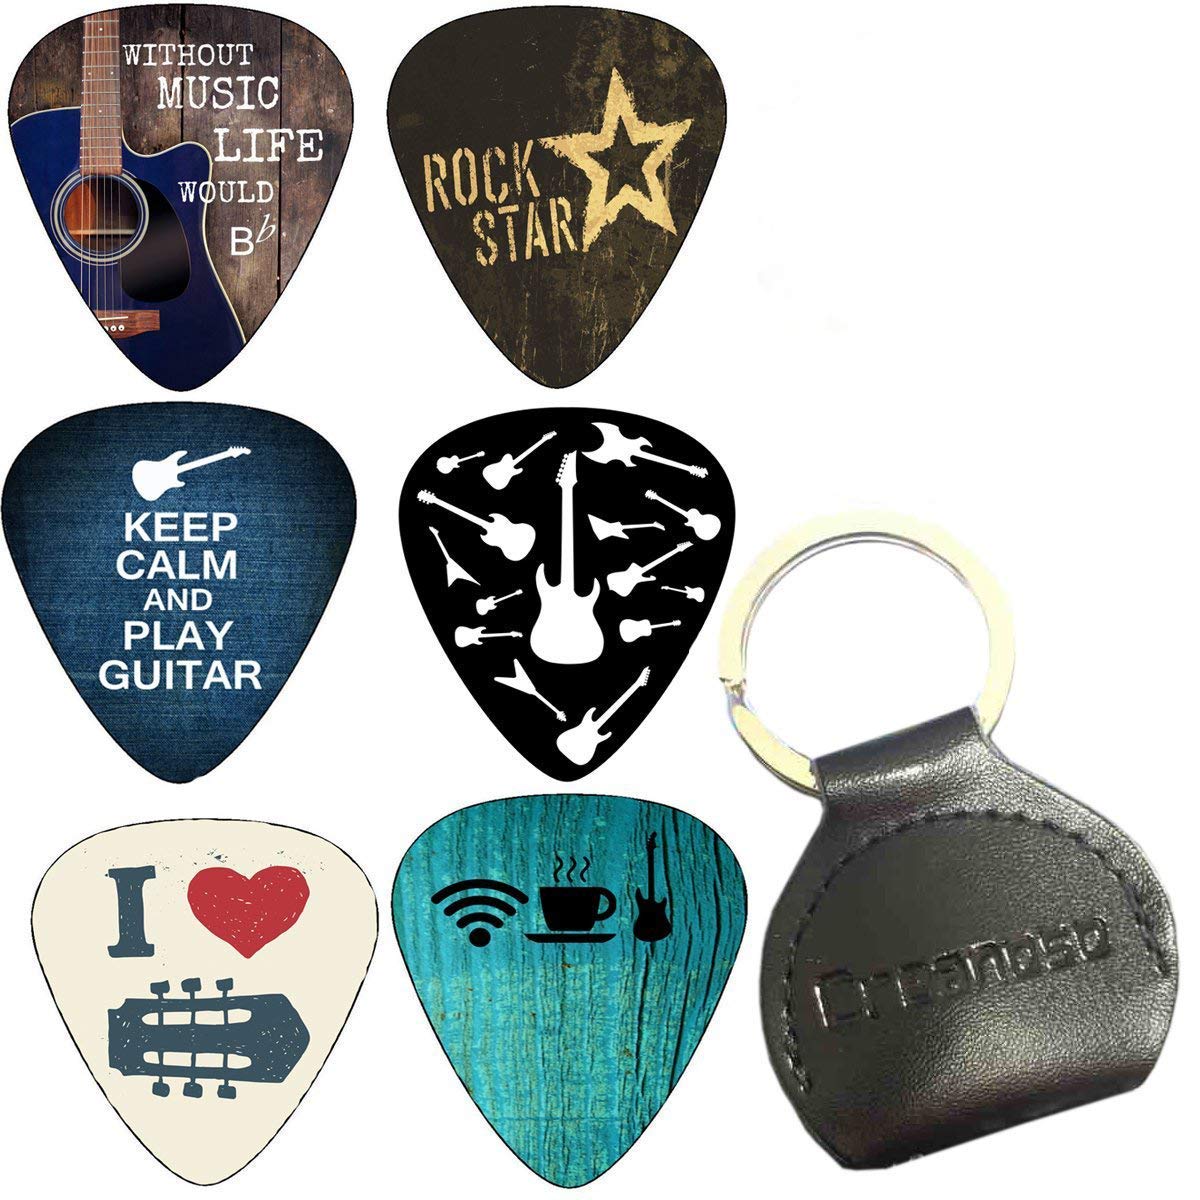 Great Stocking Stuffers Gifts for Guitarist - Black Creanoso Guitar Pick Holder 2-Pack 